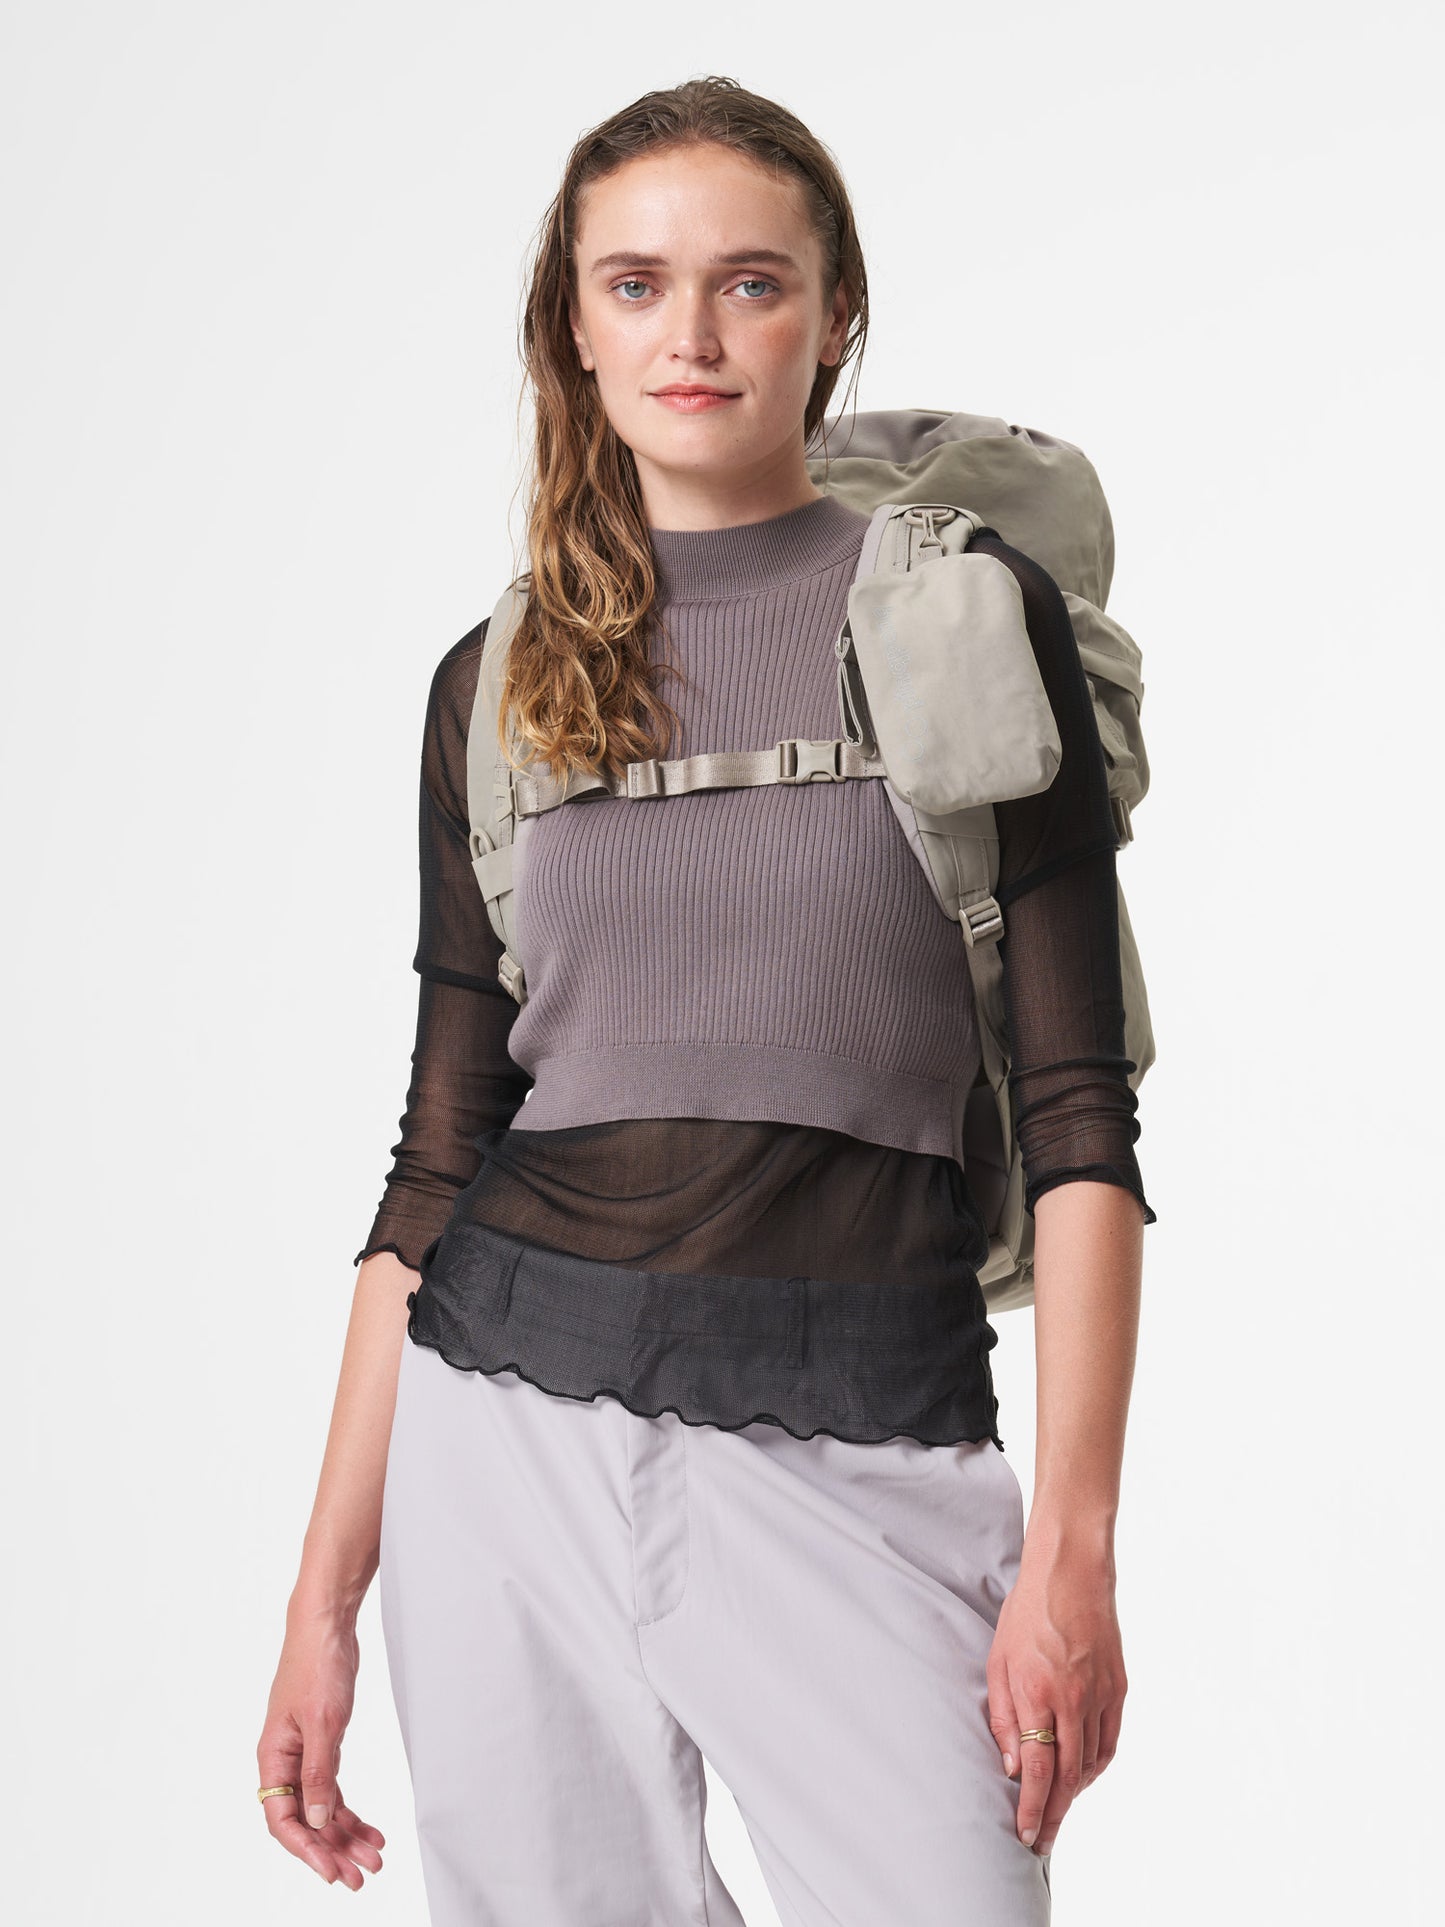 pinqponq-backpack-Blok-Medium-Crinkle-Taupe-back